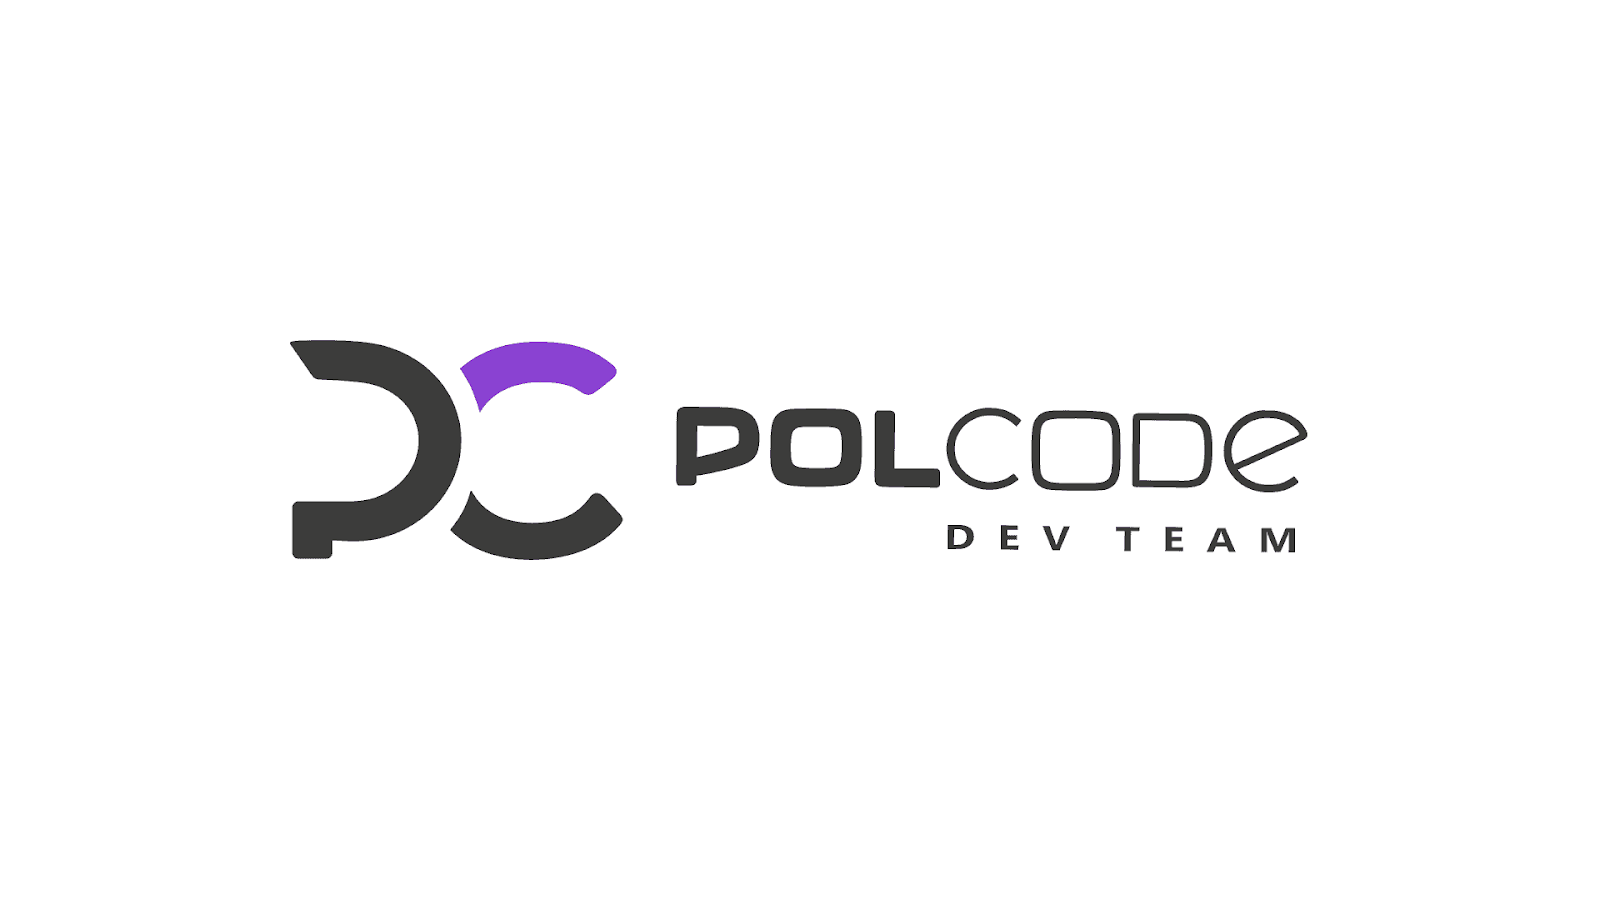 polcode logo black and purple 